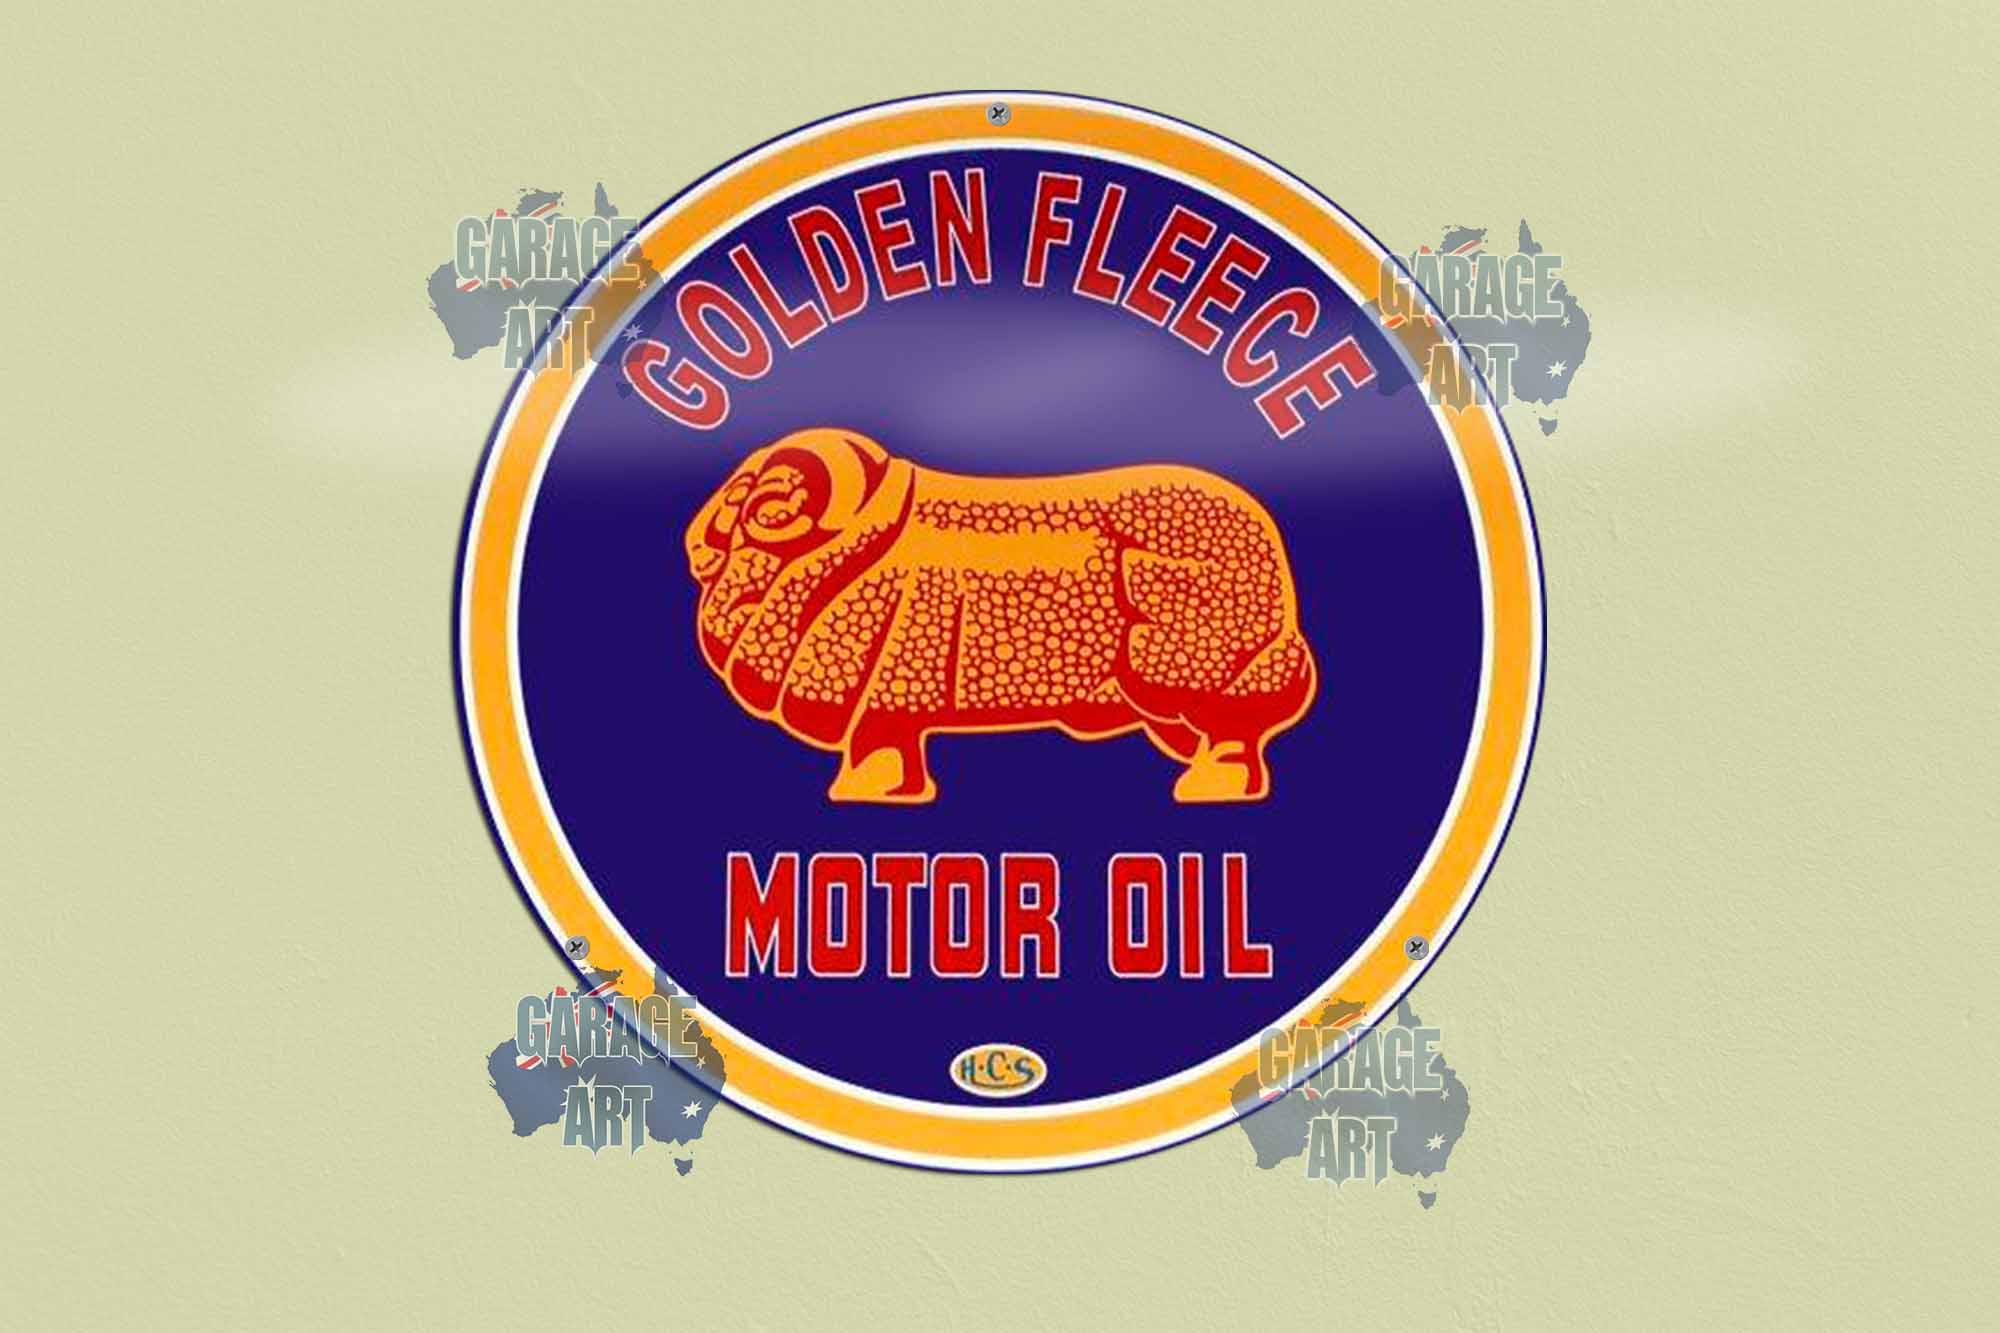 Golden Fleece Motor Oil 355mmDia Tin Sign freeshipping - garageartaustralia